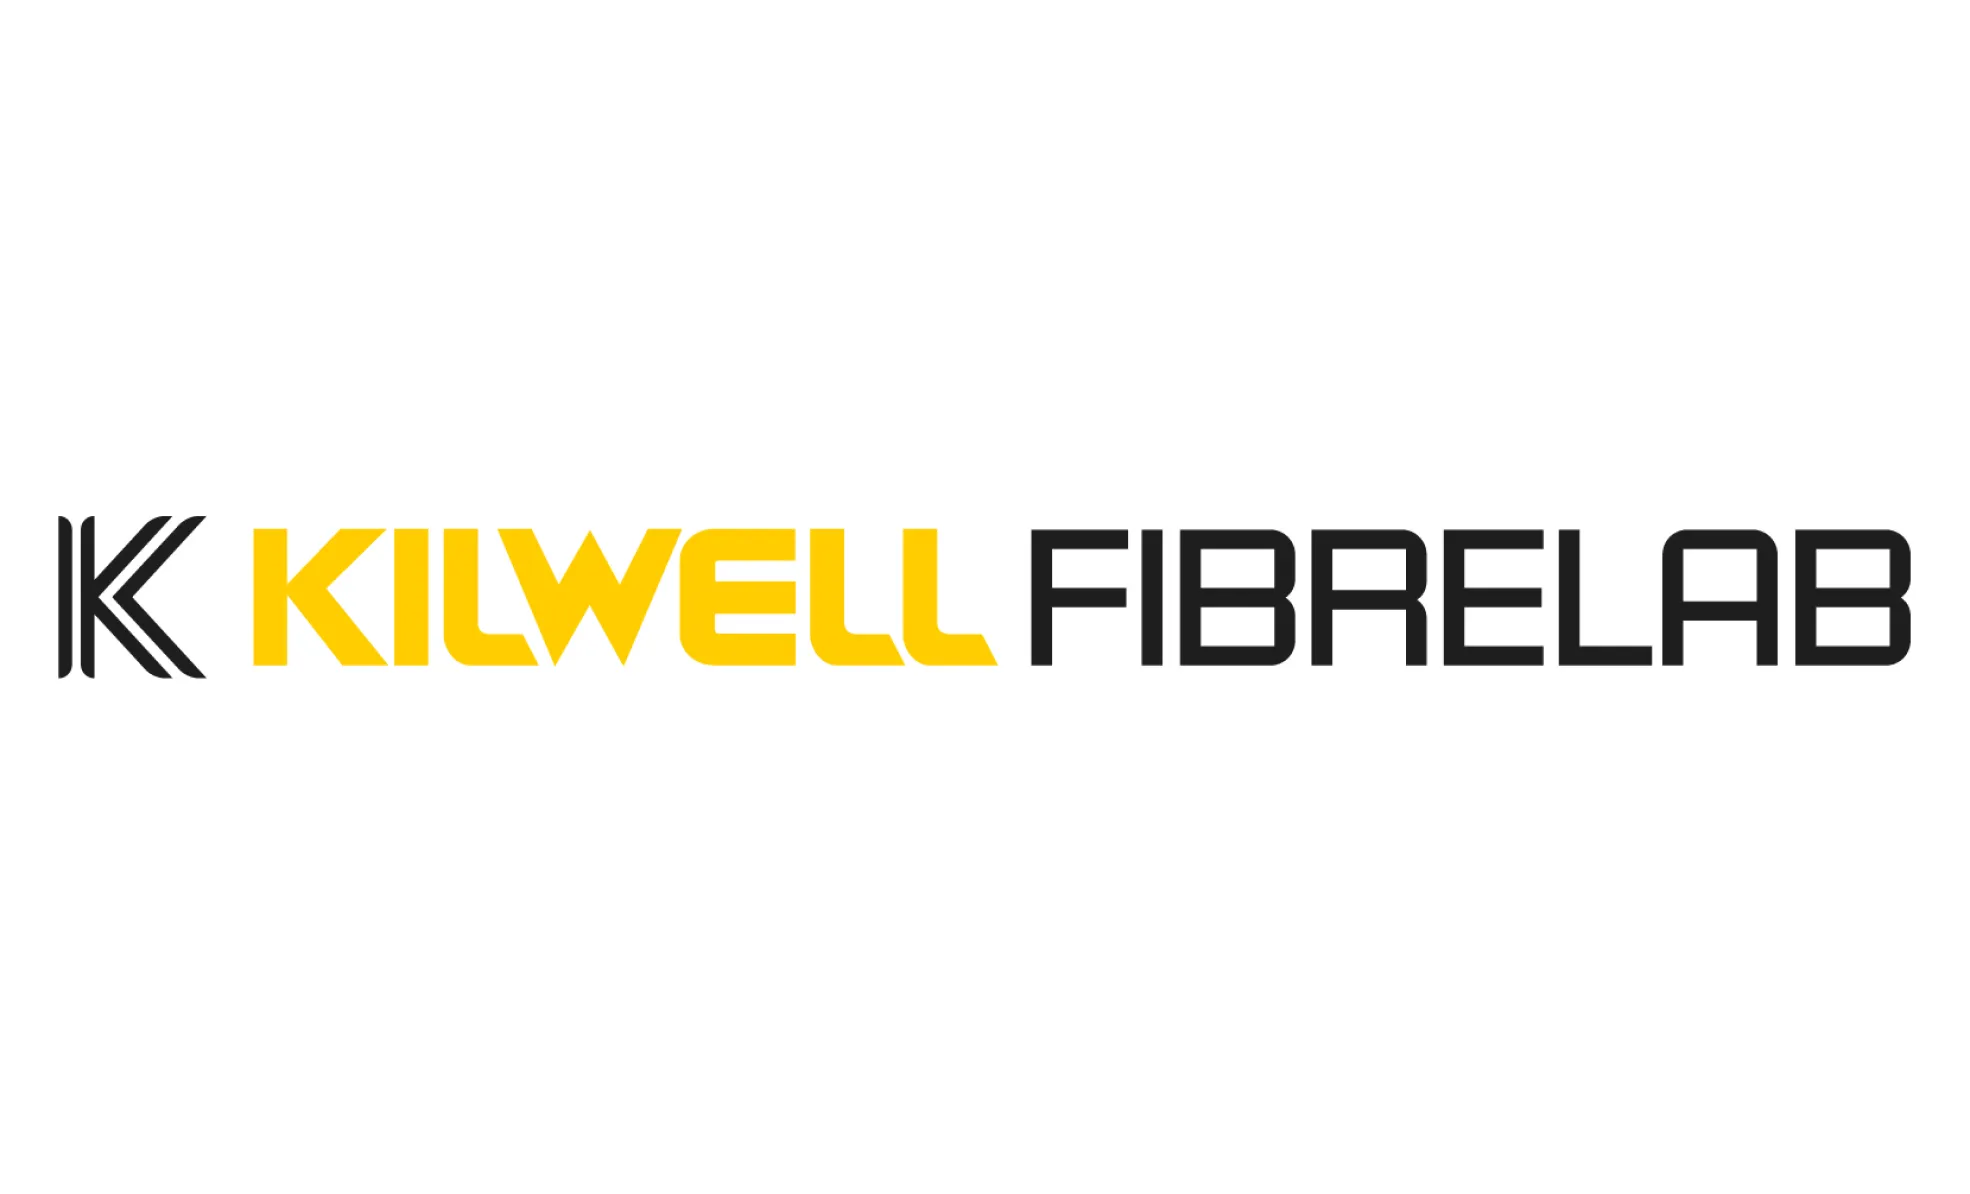 Kilwell Fibrelab sm